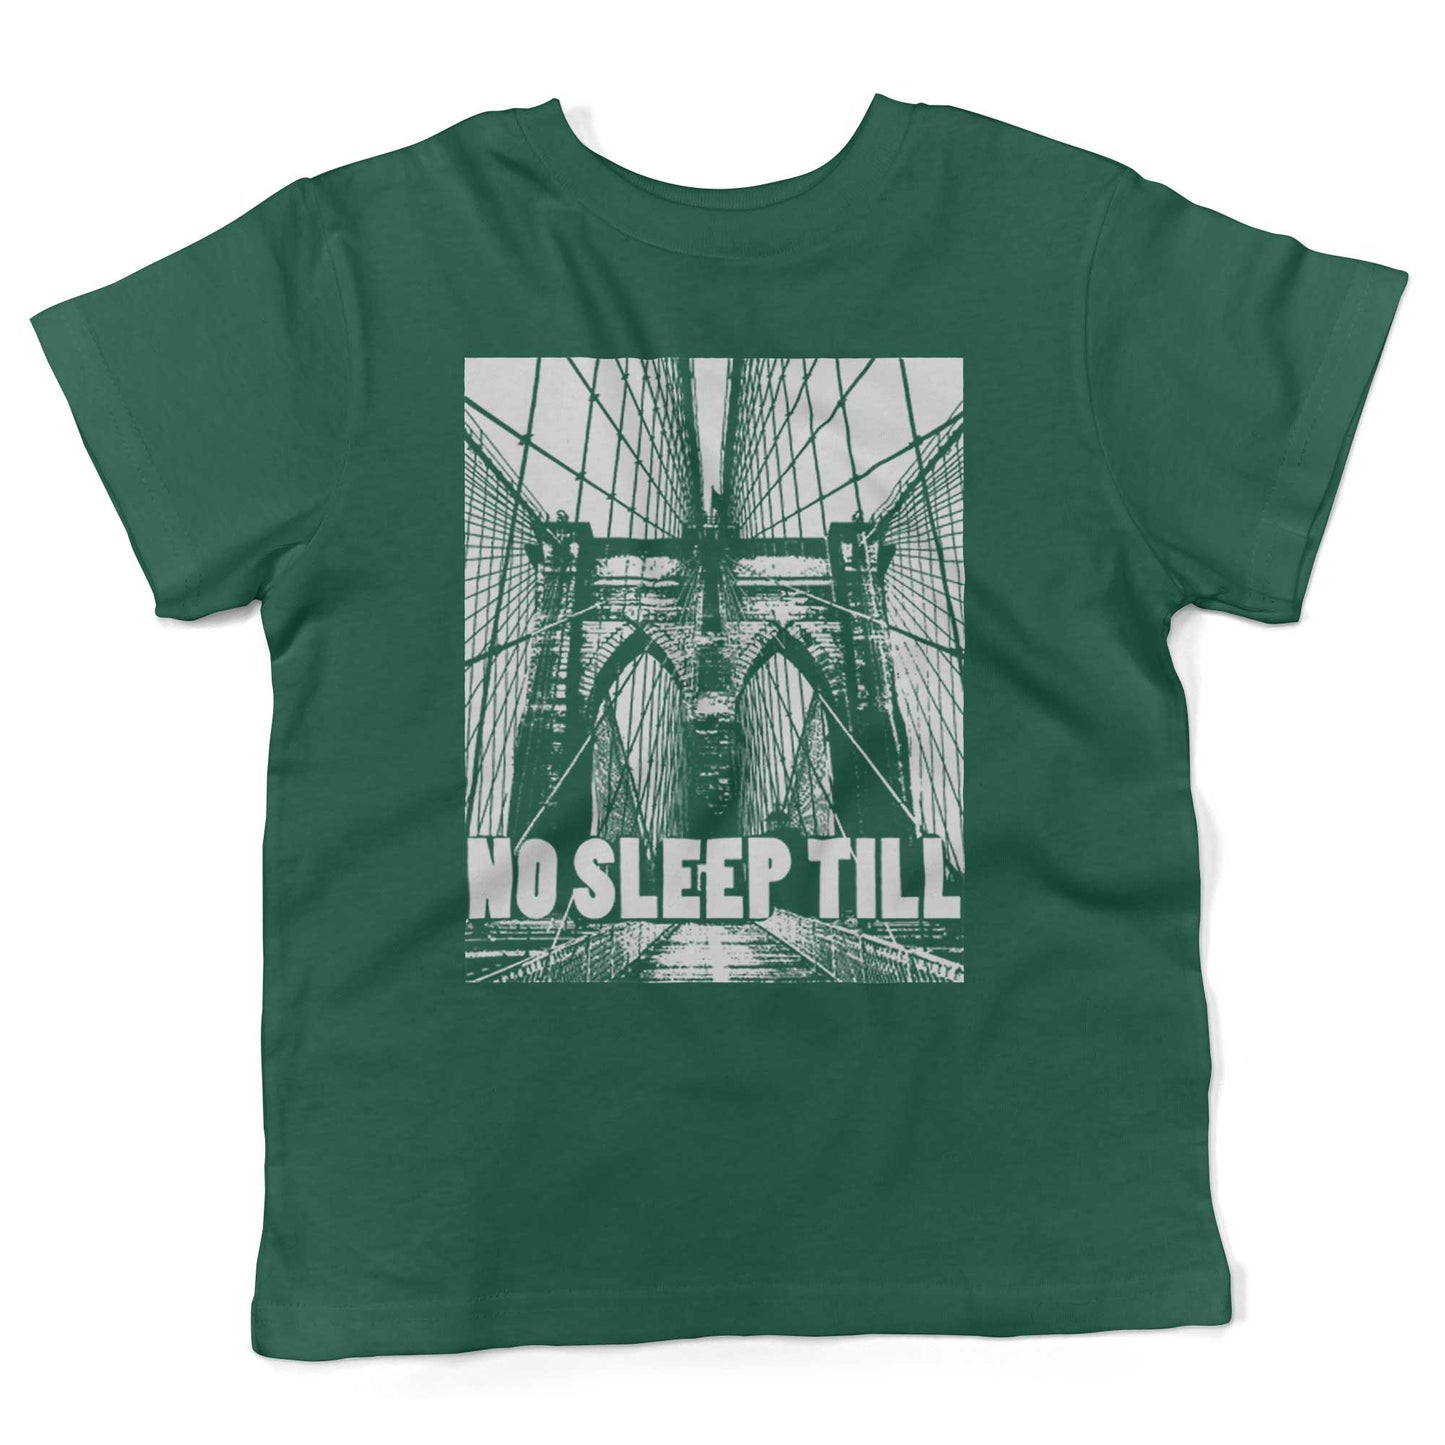 No Sleep Till Brooklyn Toddler Shirt-Kelly Green-2T